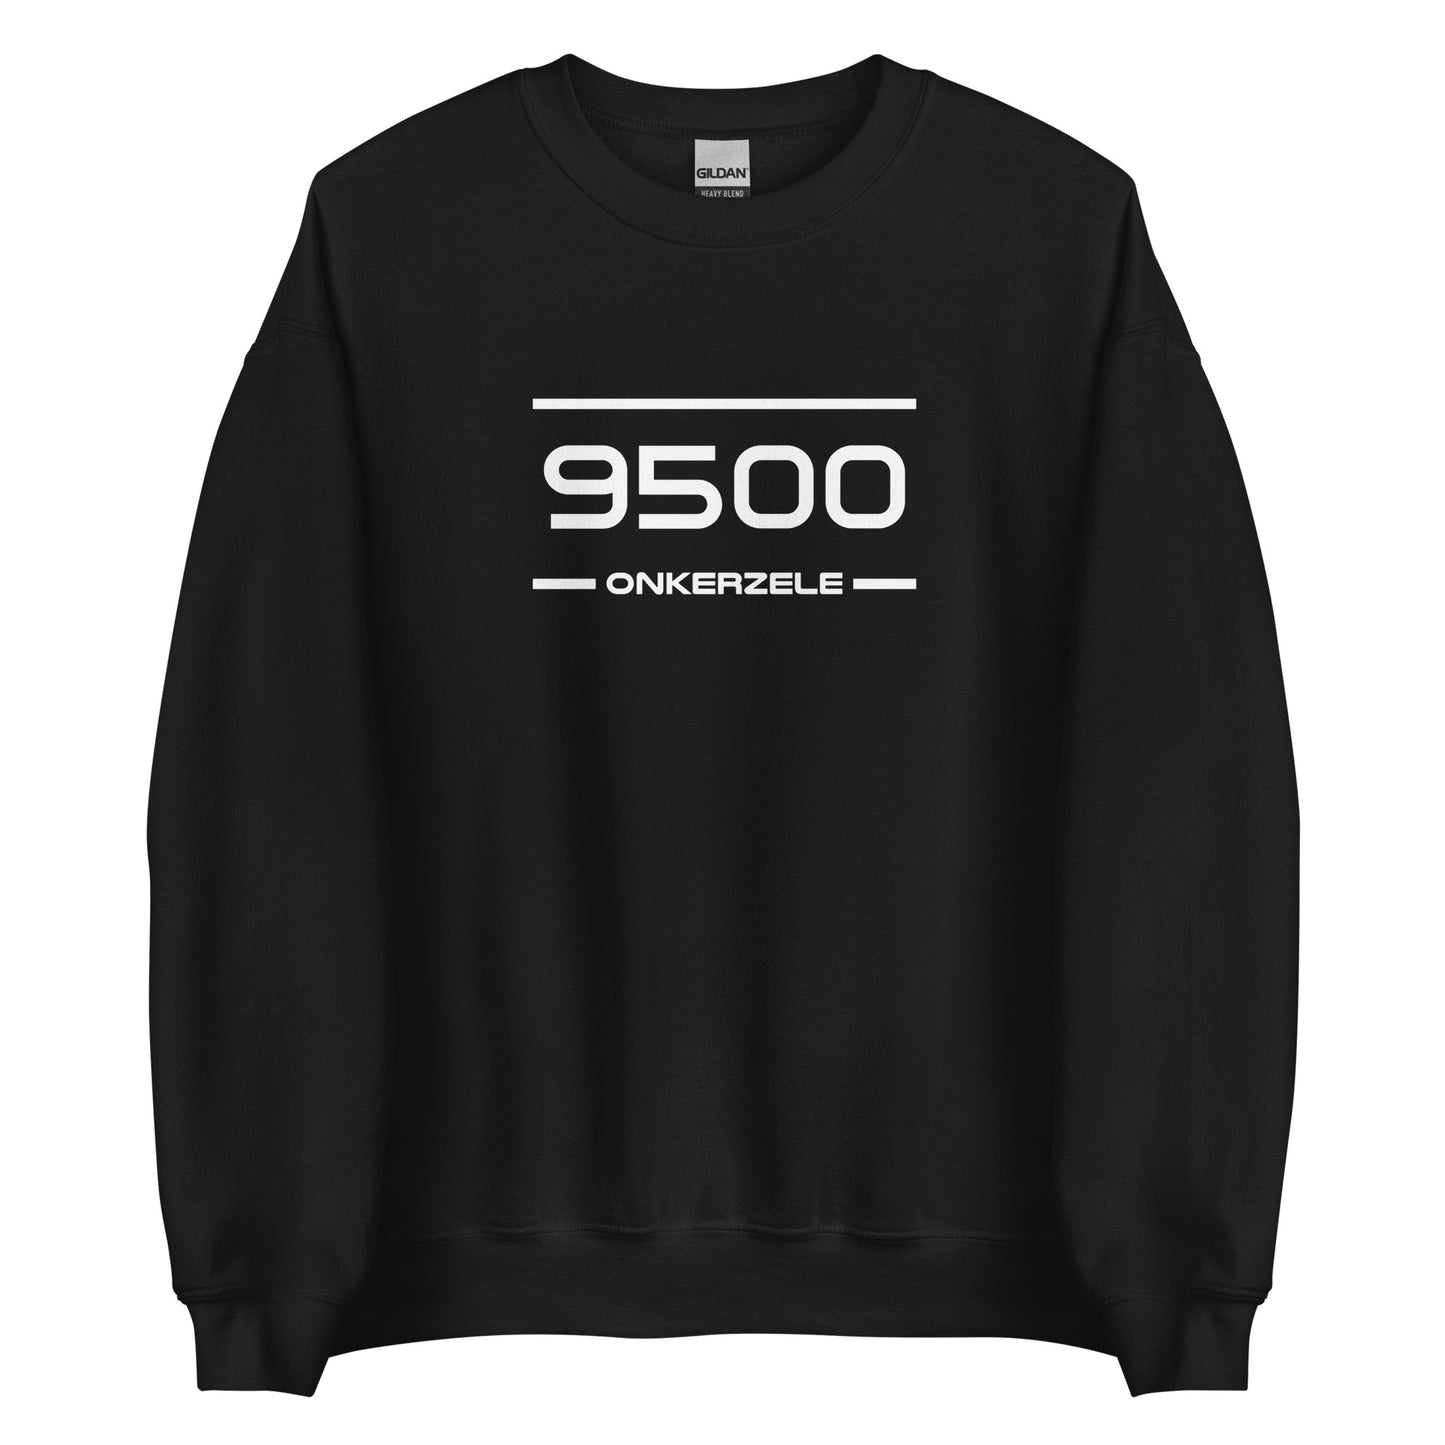 Sweater - 9500 - Onkerzele (M/V)